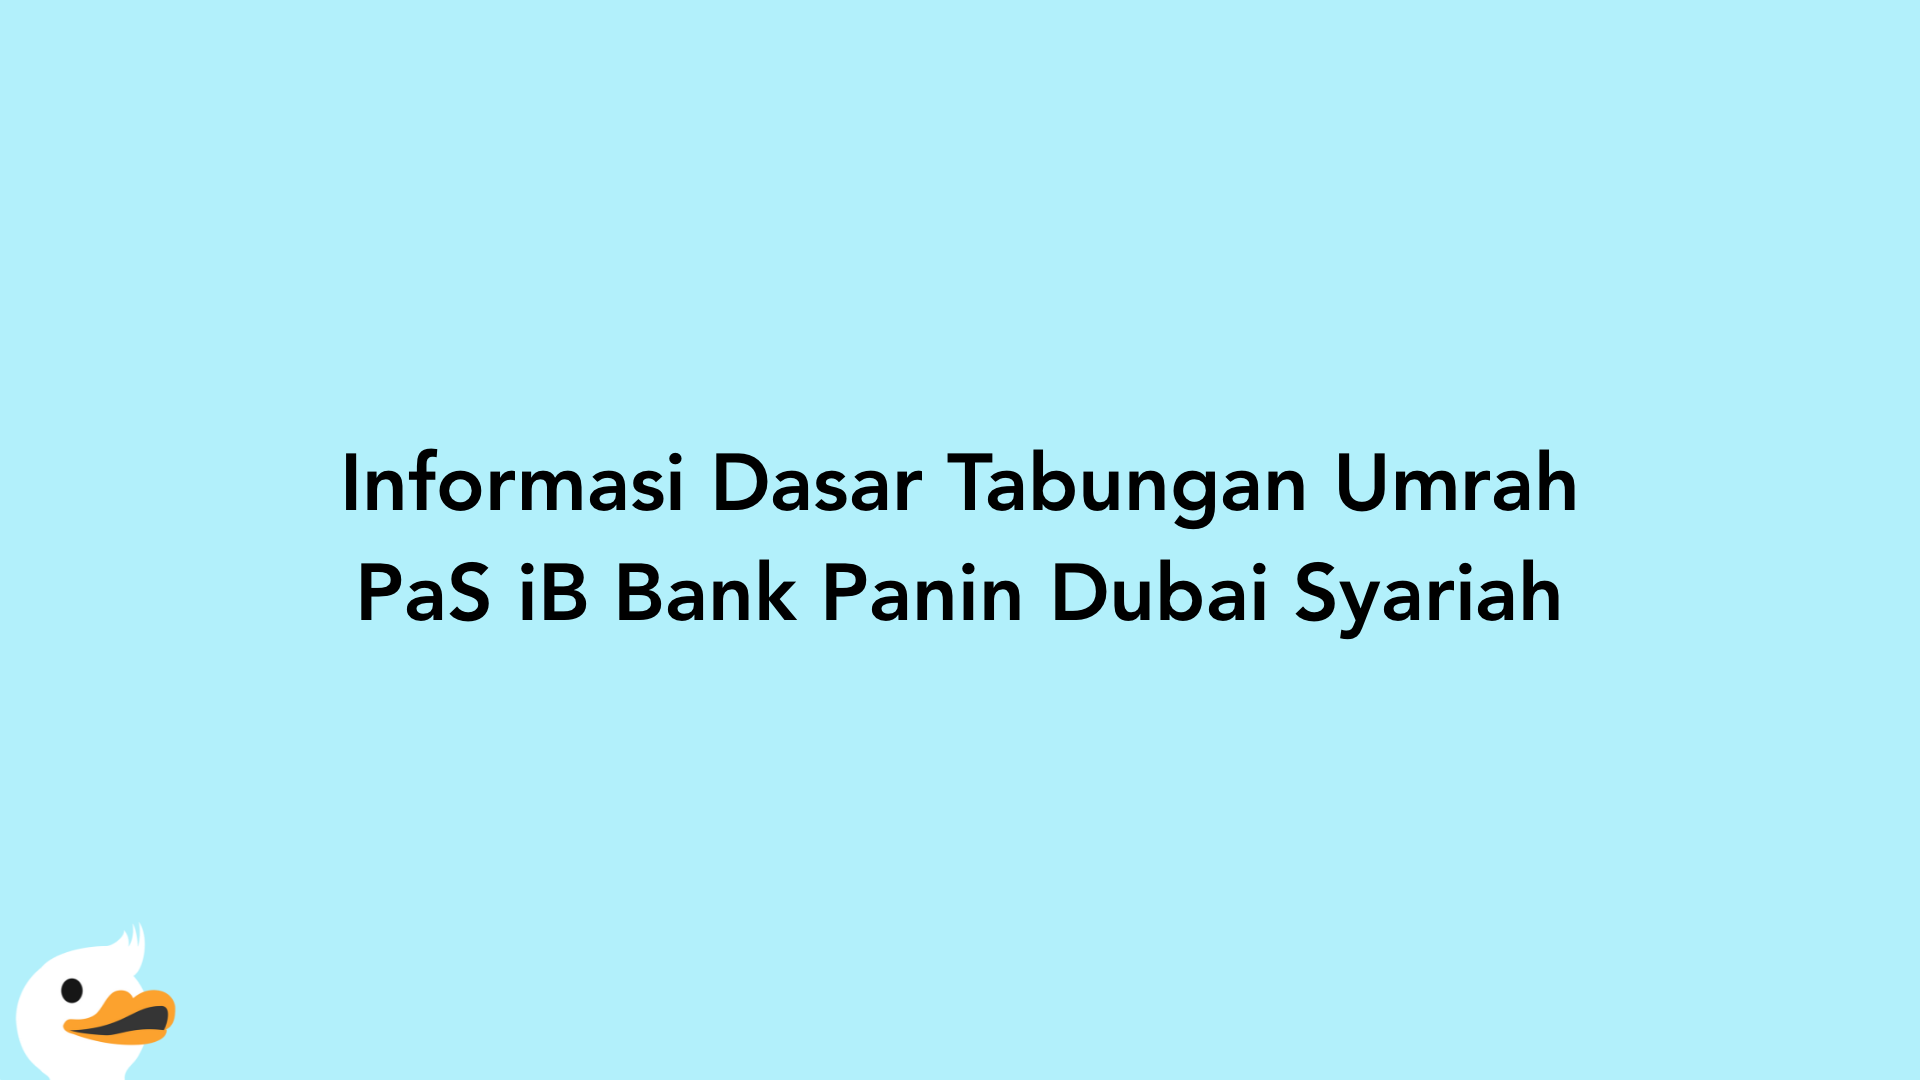 Informasi Dasar Tabungan Umrah PaS iB Bank Panin Dubai Syariah